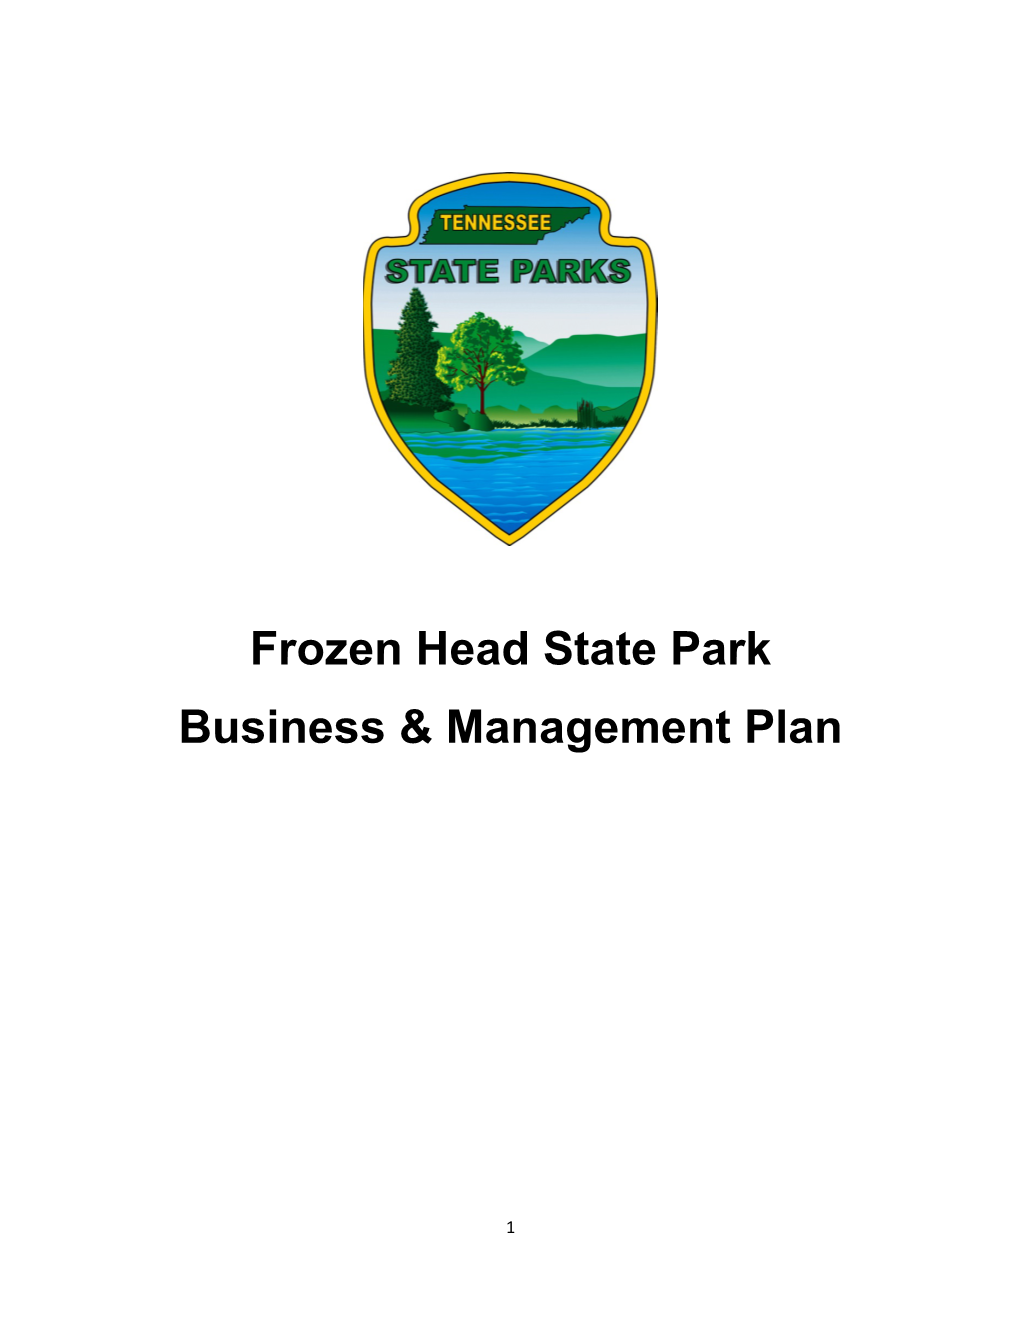 Frozen Head State Park Business & Management Plan